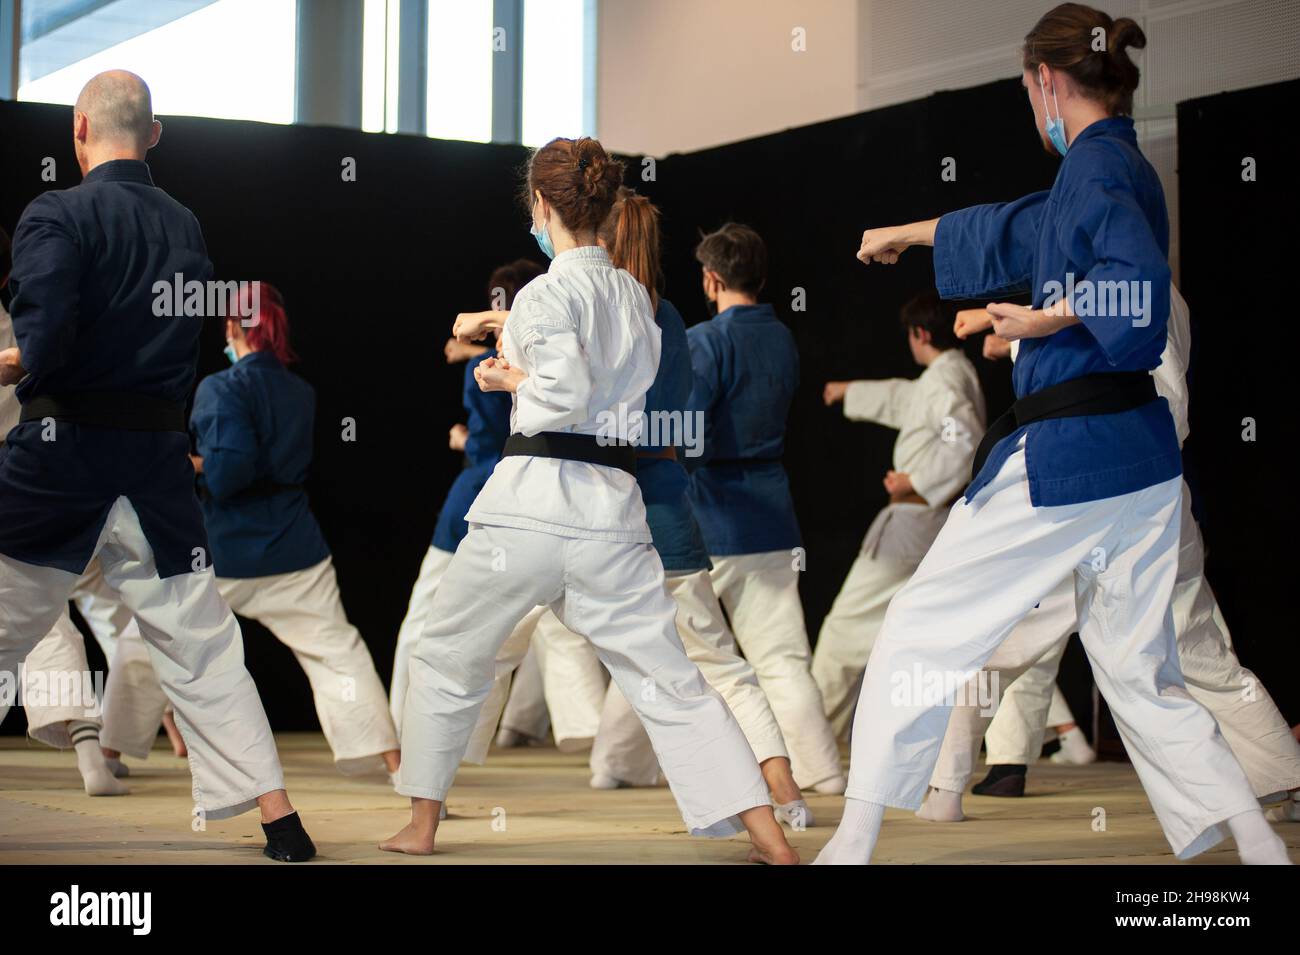 Athletes of Karate during a training session. Mawashi Zuki position. Stock Photo